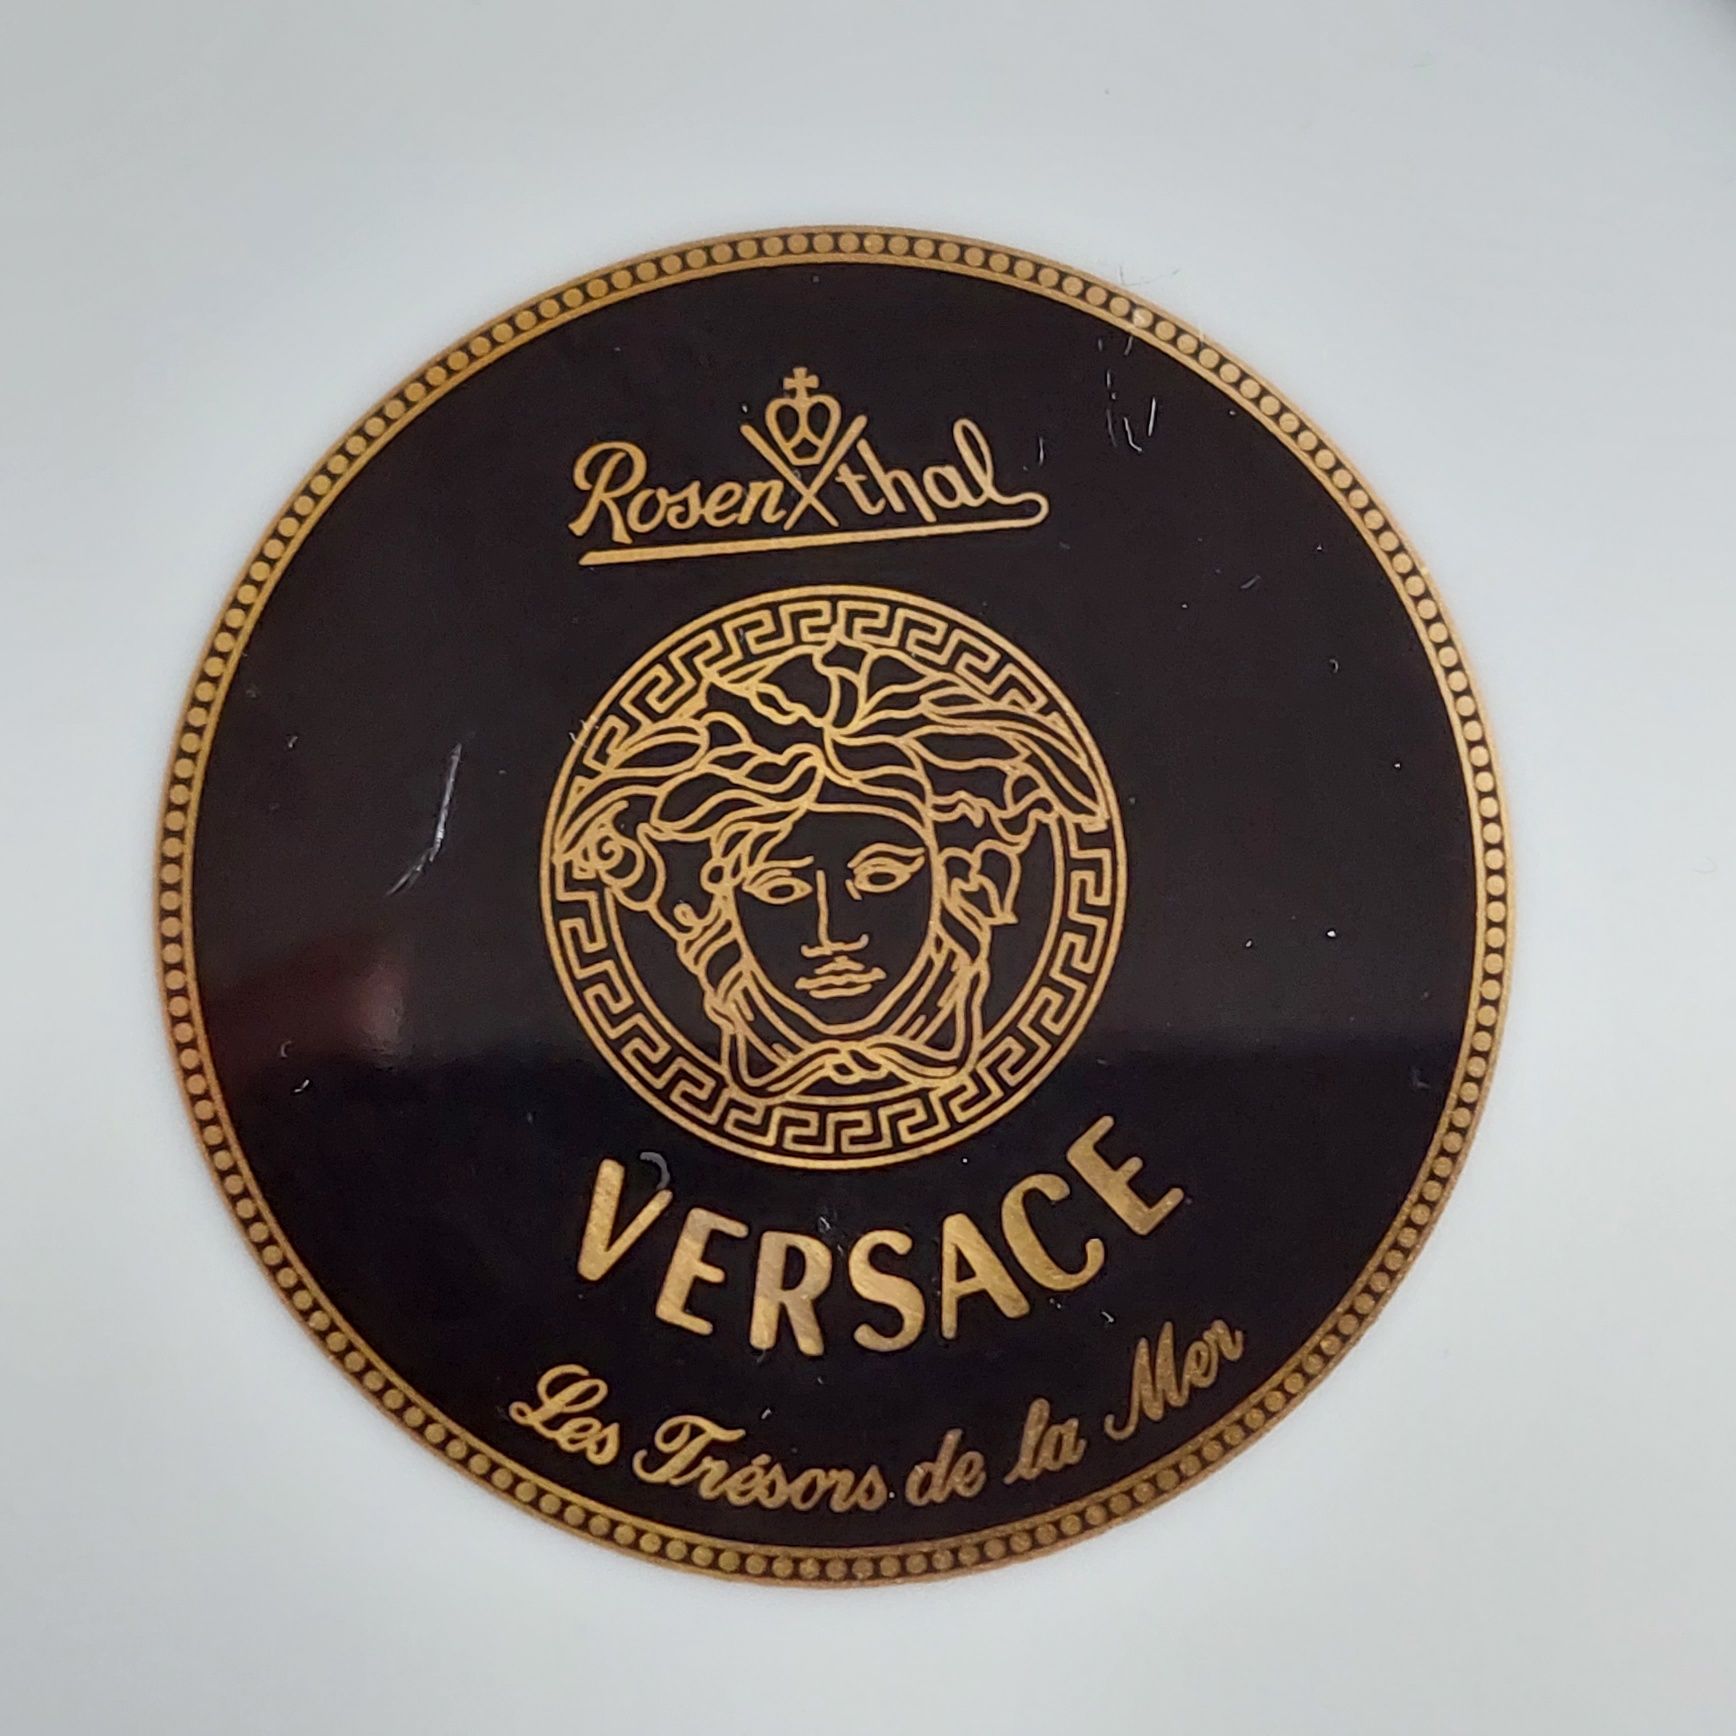 Rosenthal Versace Tresors de la Mer